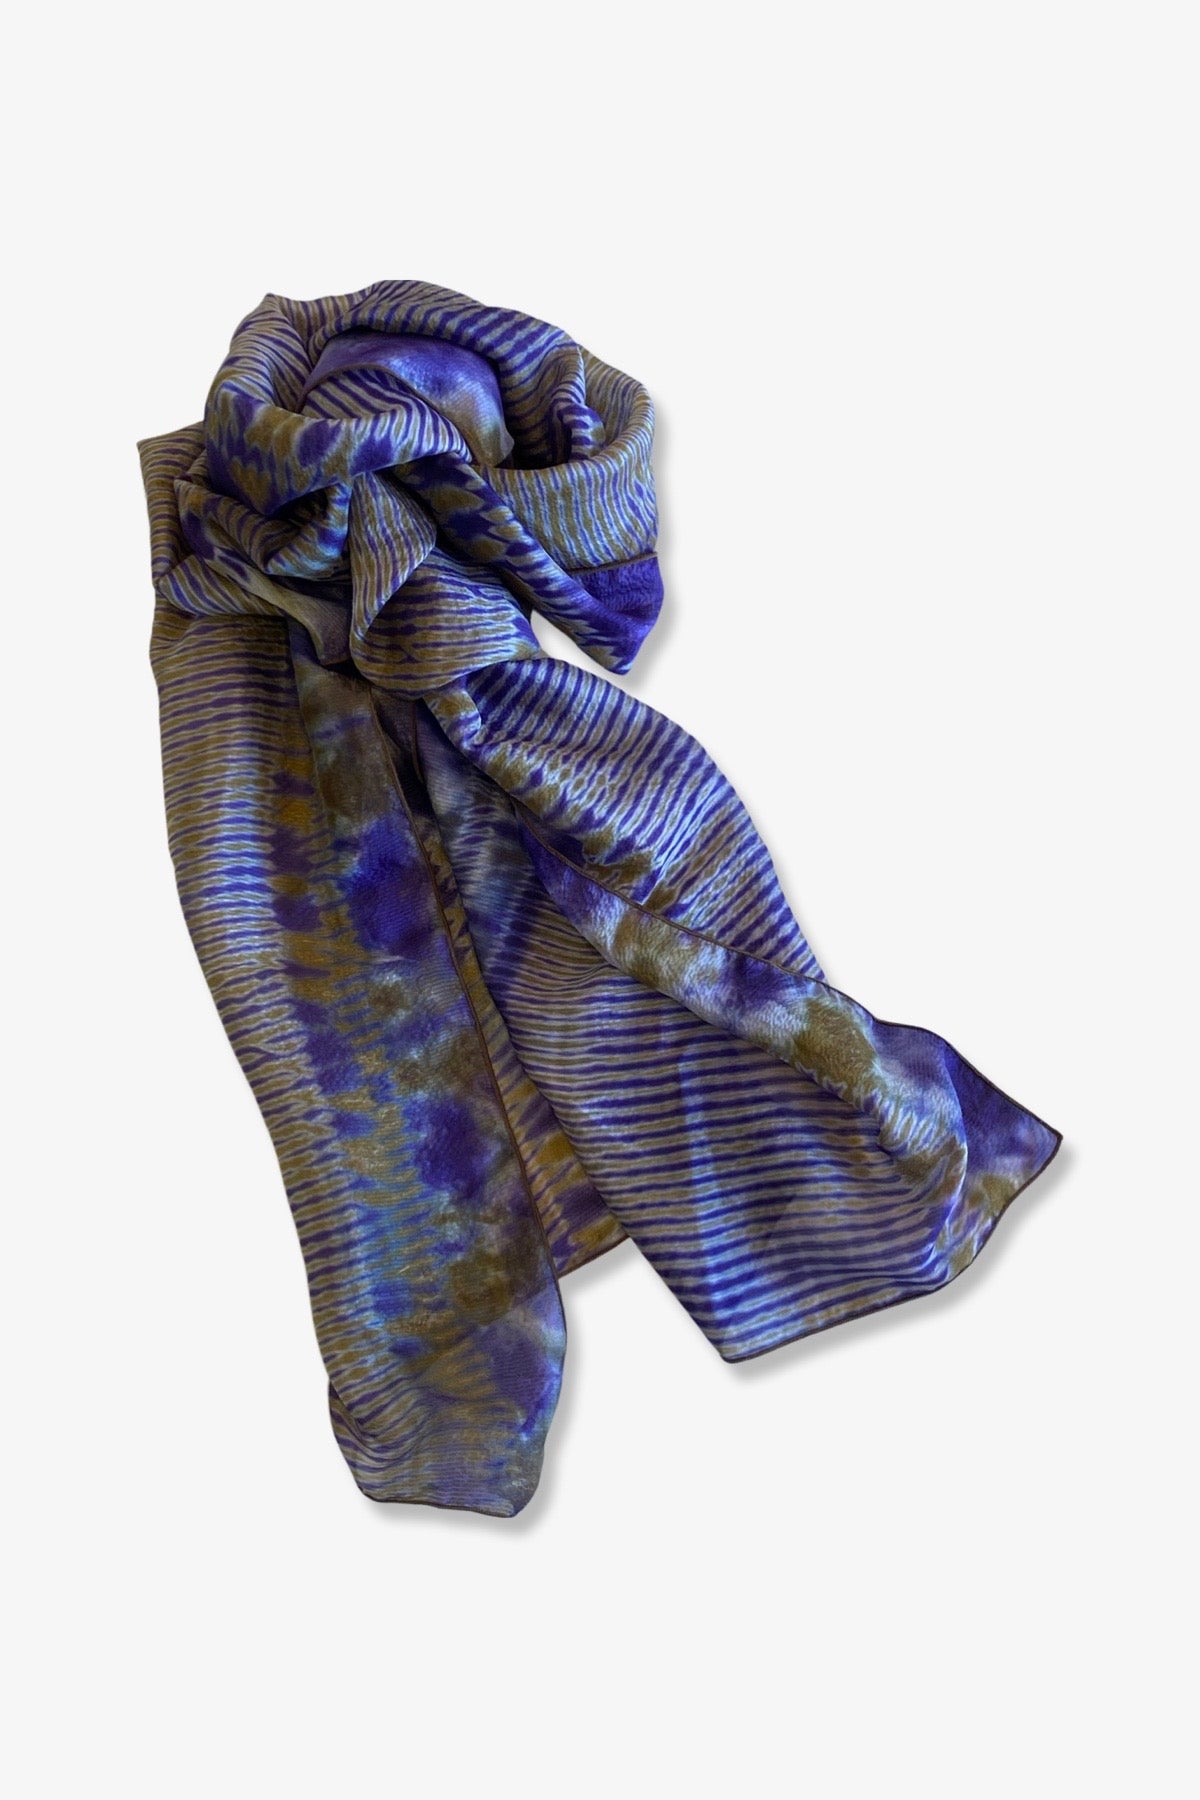 Shibori Dyed Silk Scarf | Prince